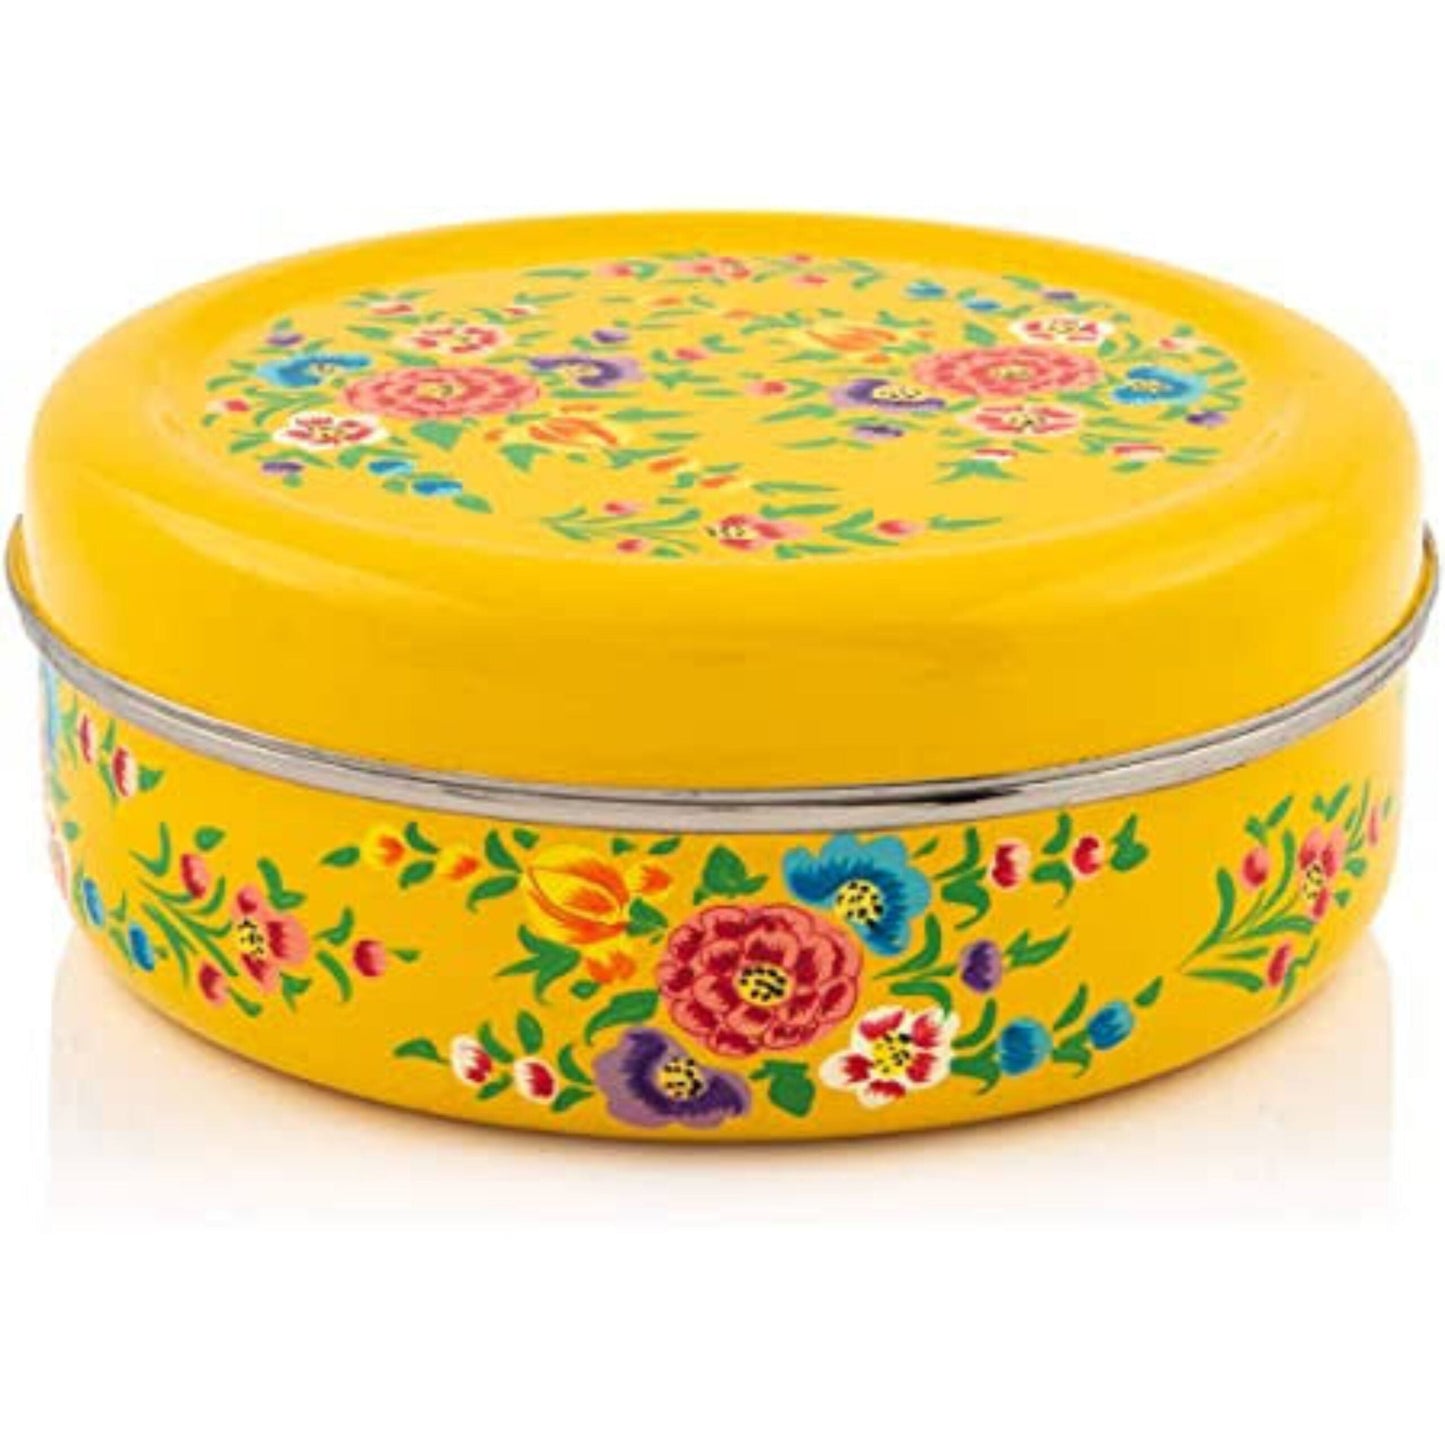 Rajasthani Handpainted Stainless Steel Masala Box Yellow Colour